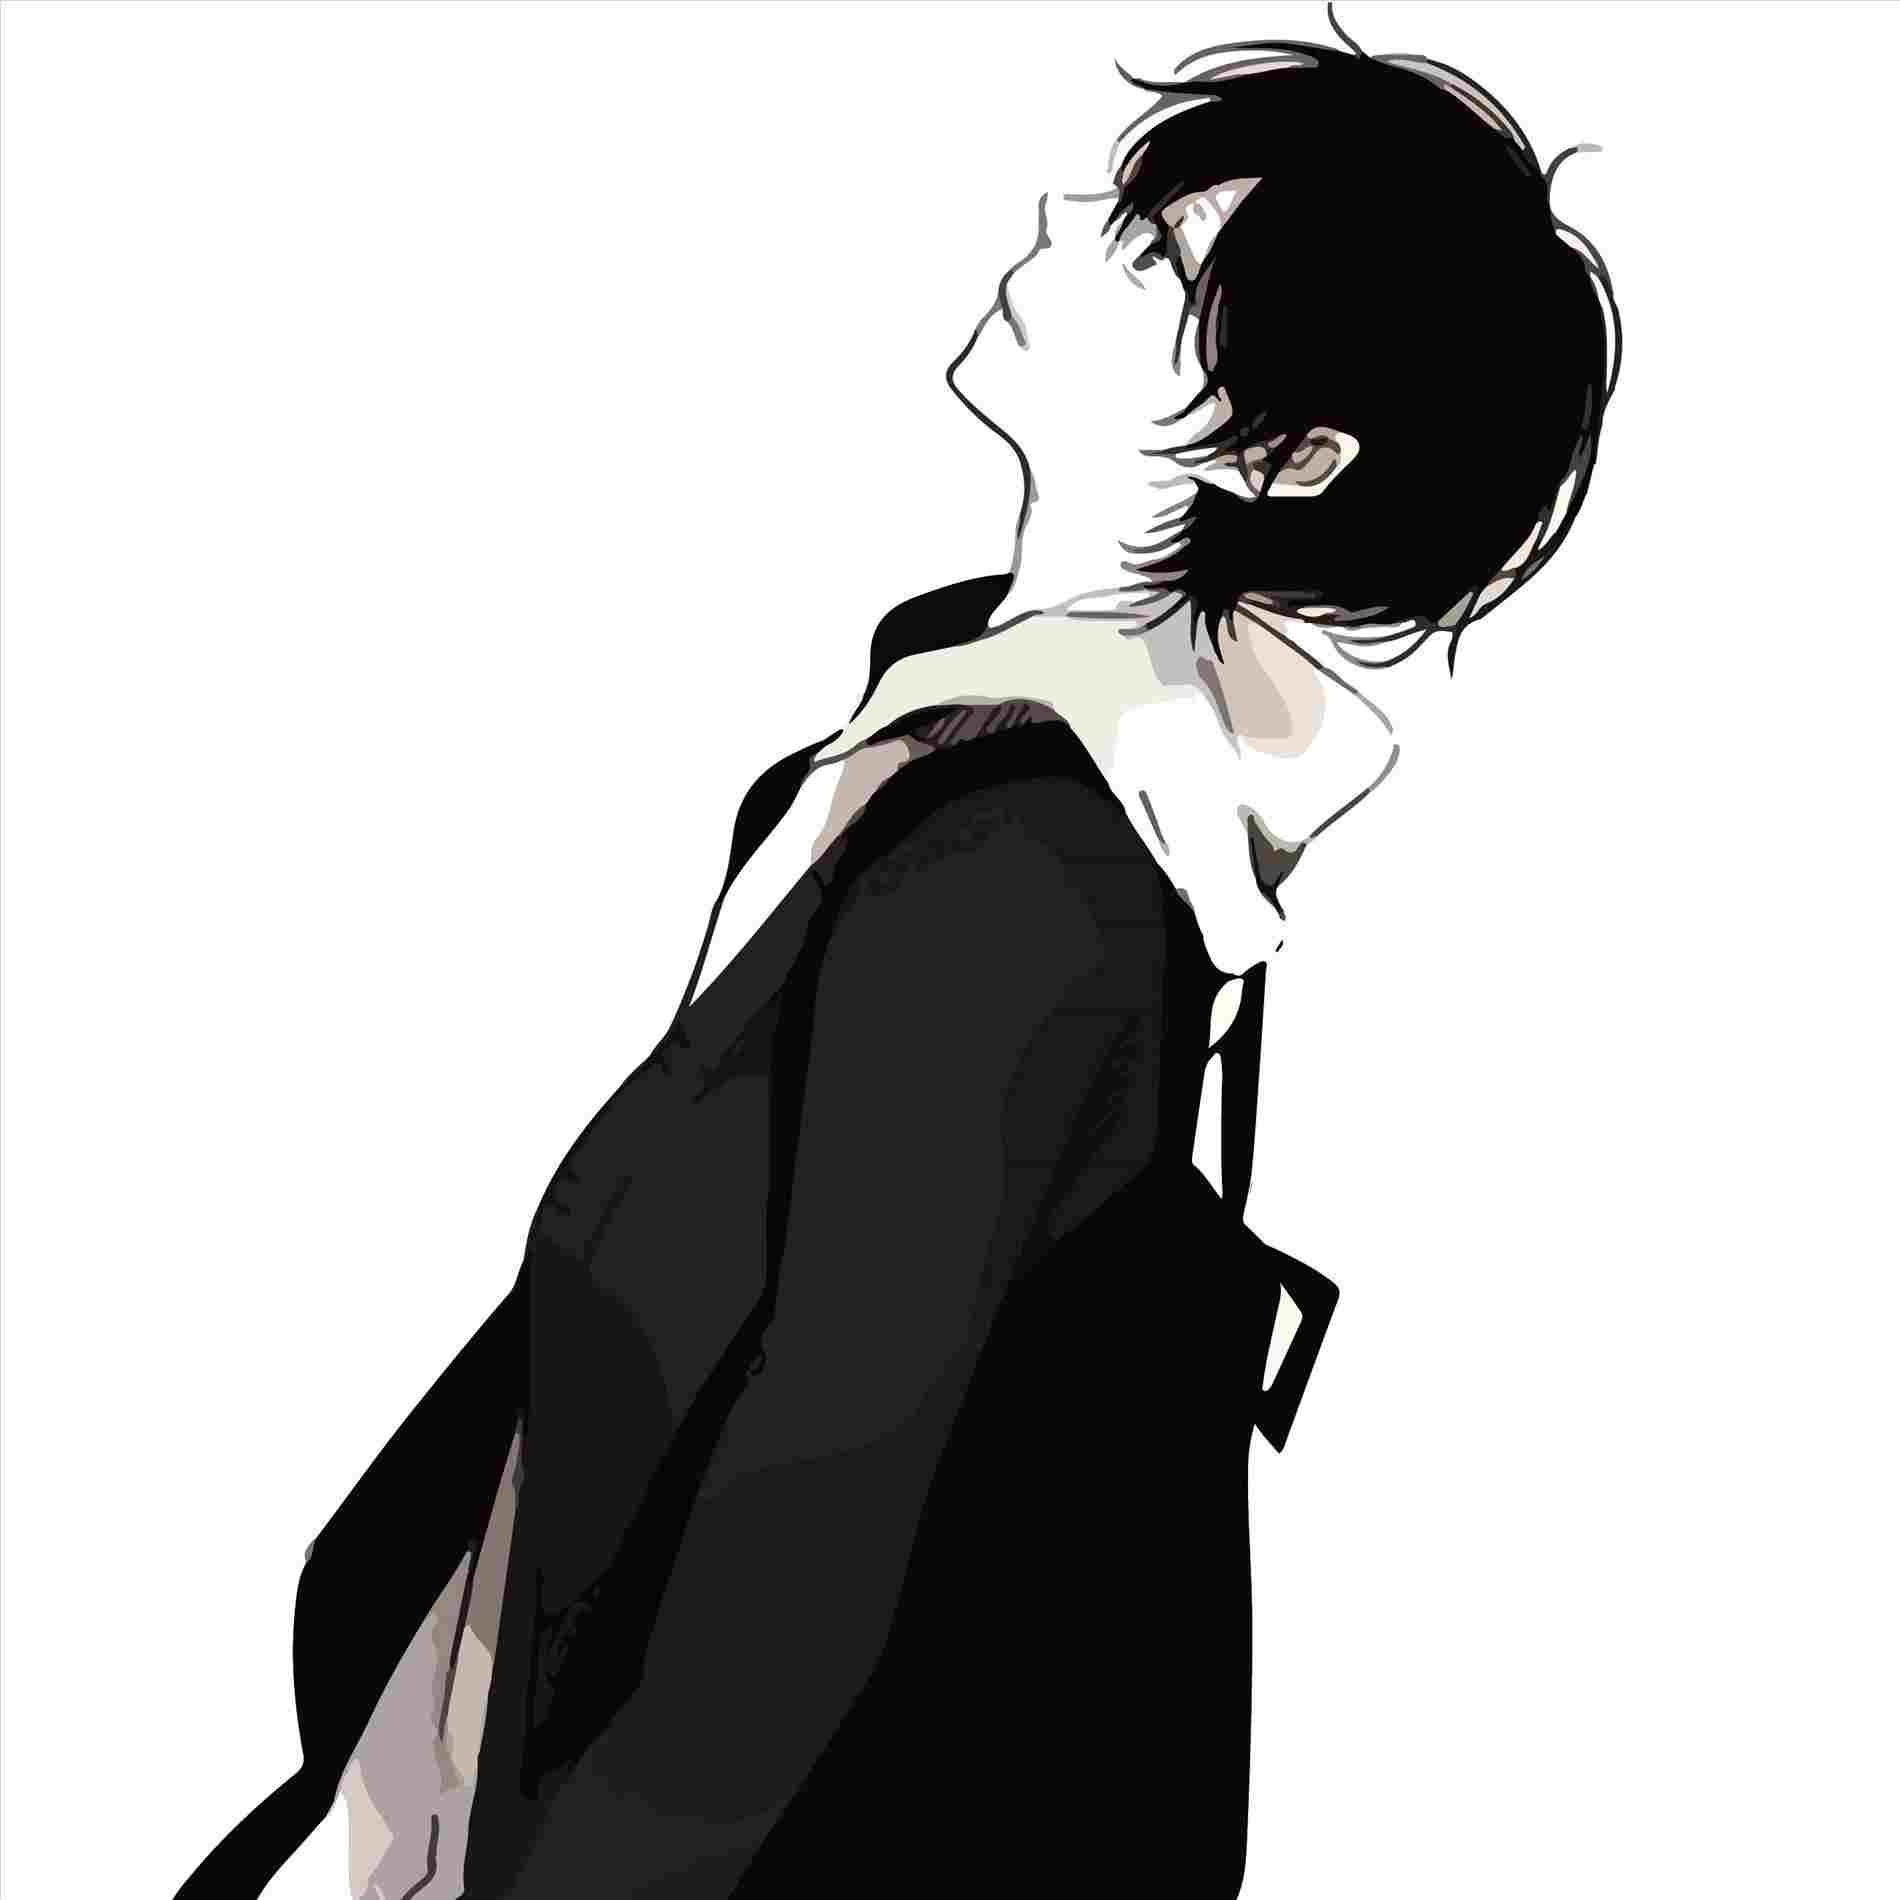 Depressed Anime Boy Wallpaper Free Depressed Anime Boy Background